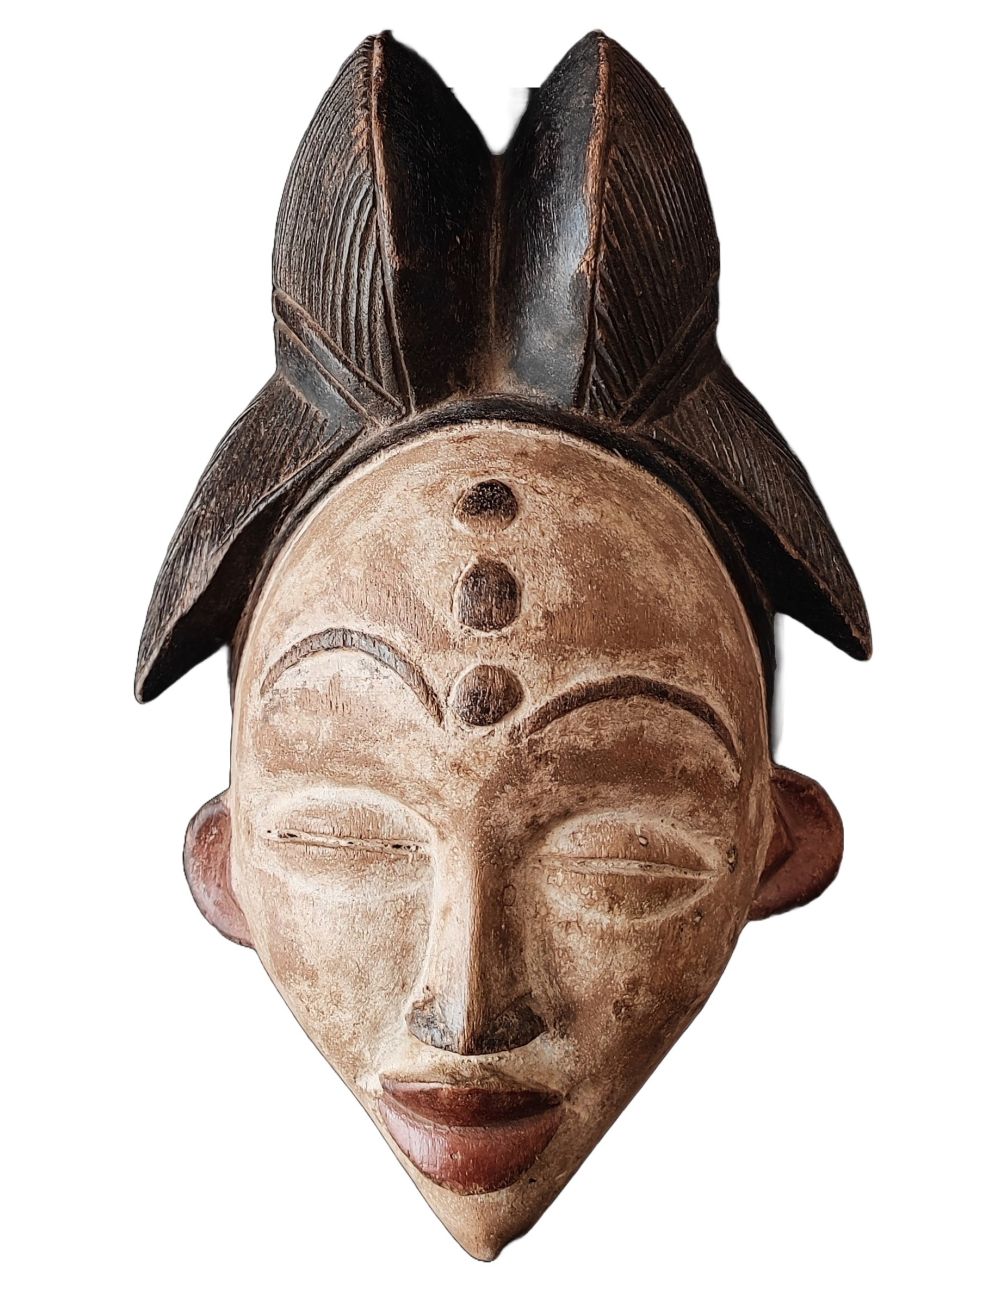 Maska plemienna Afryka Pumu Gabon południowy